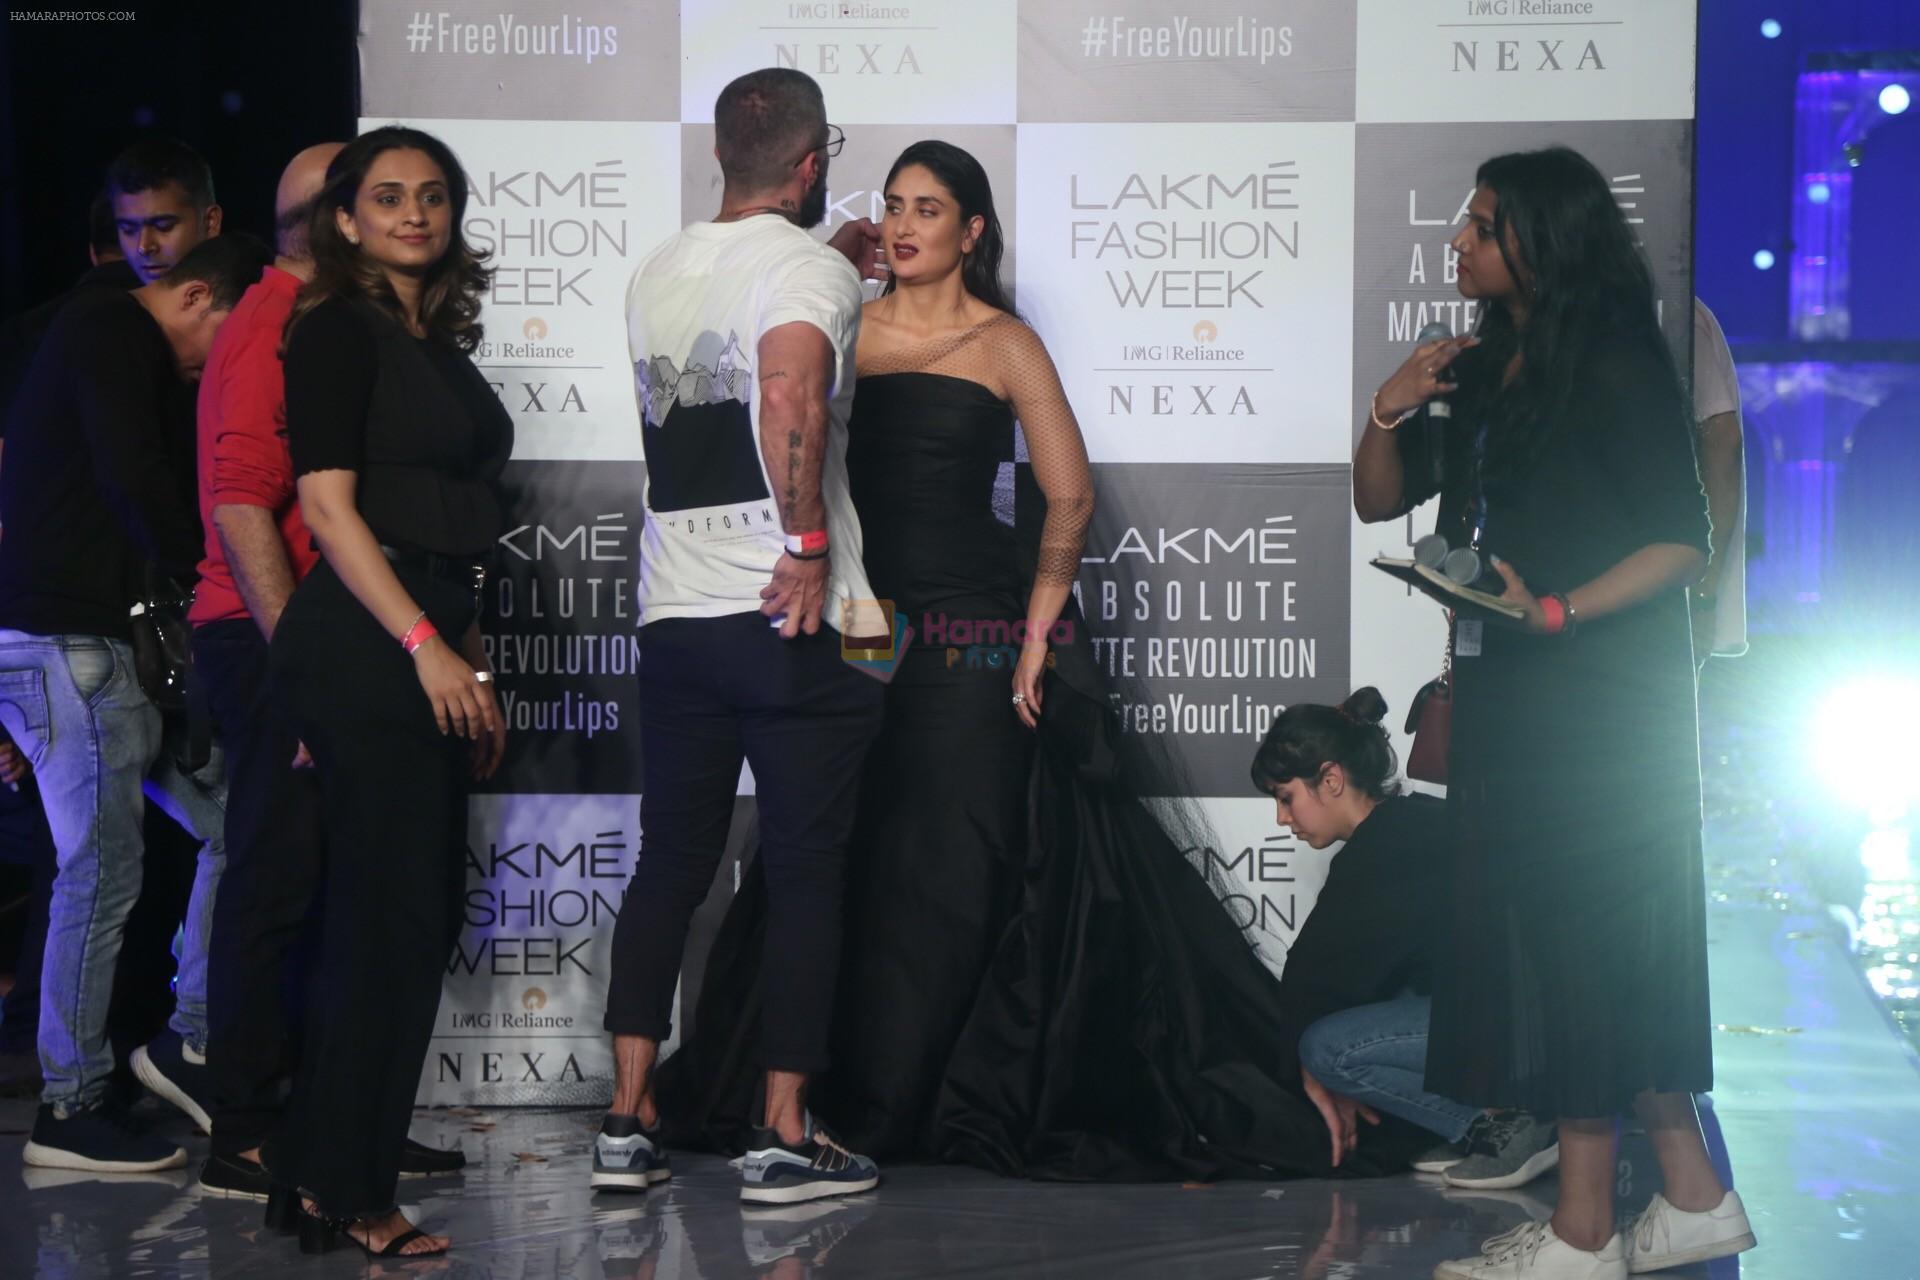 Kareena Kapoor Khan walks for Gauri & Nainika At Lakme Fashion Week 2019 on 25th Aug 2019